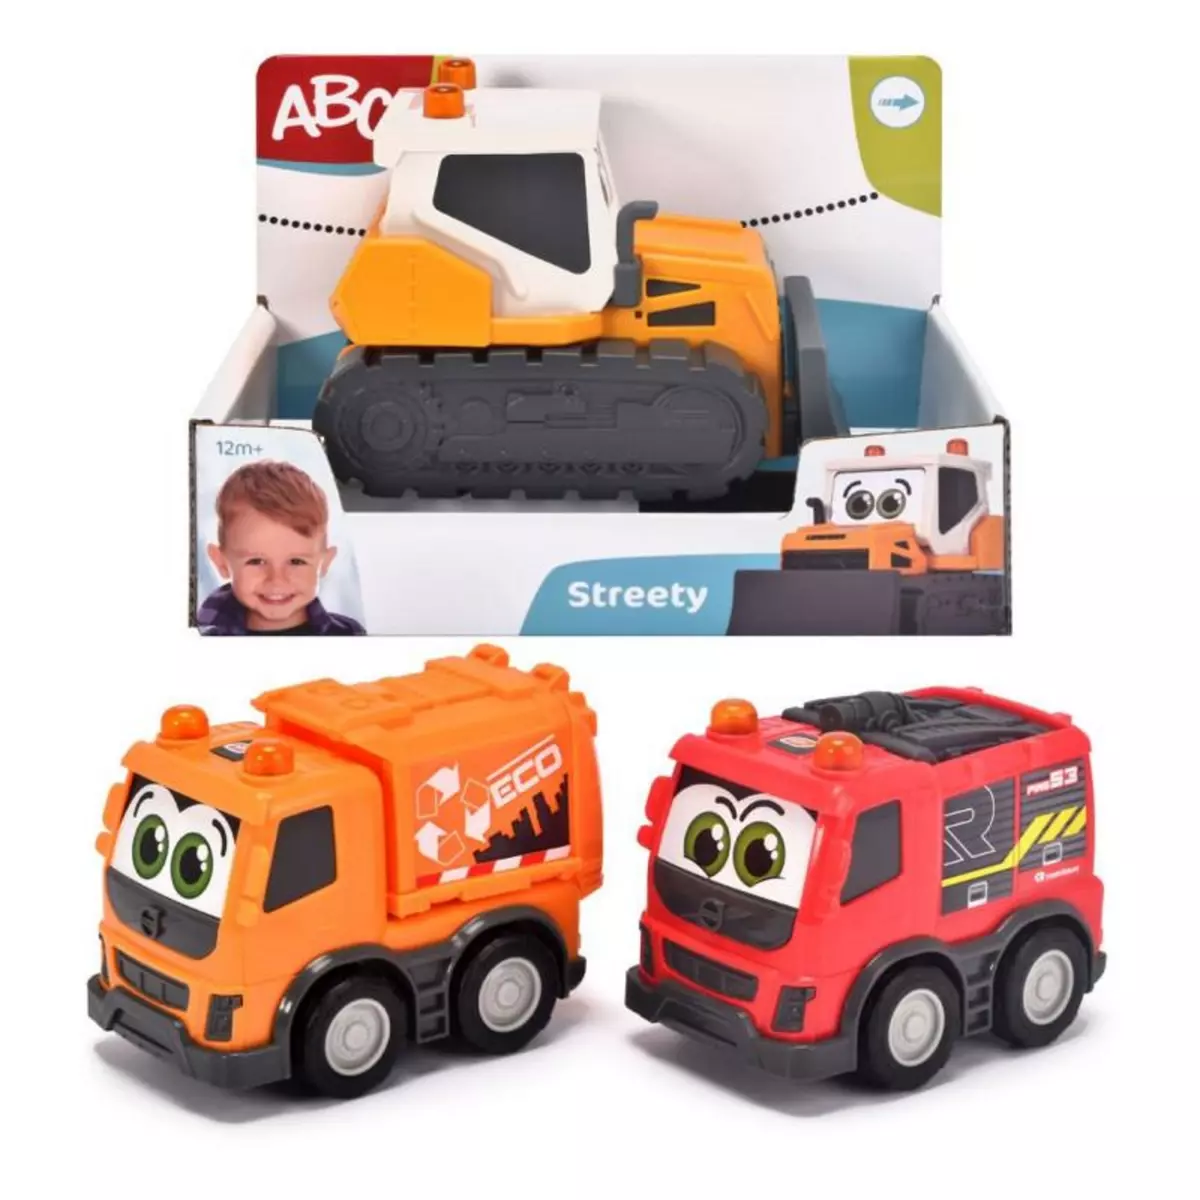 ABC ABC Streety Work Vehicles 204112007